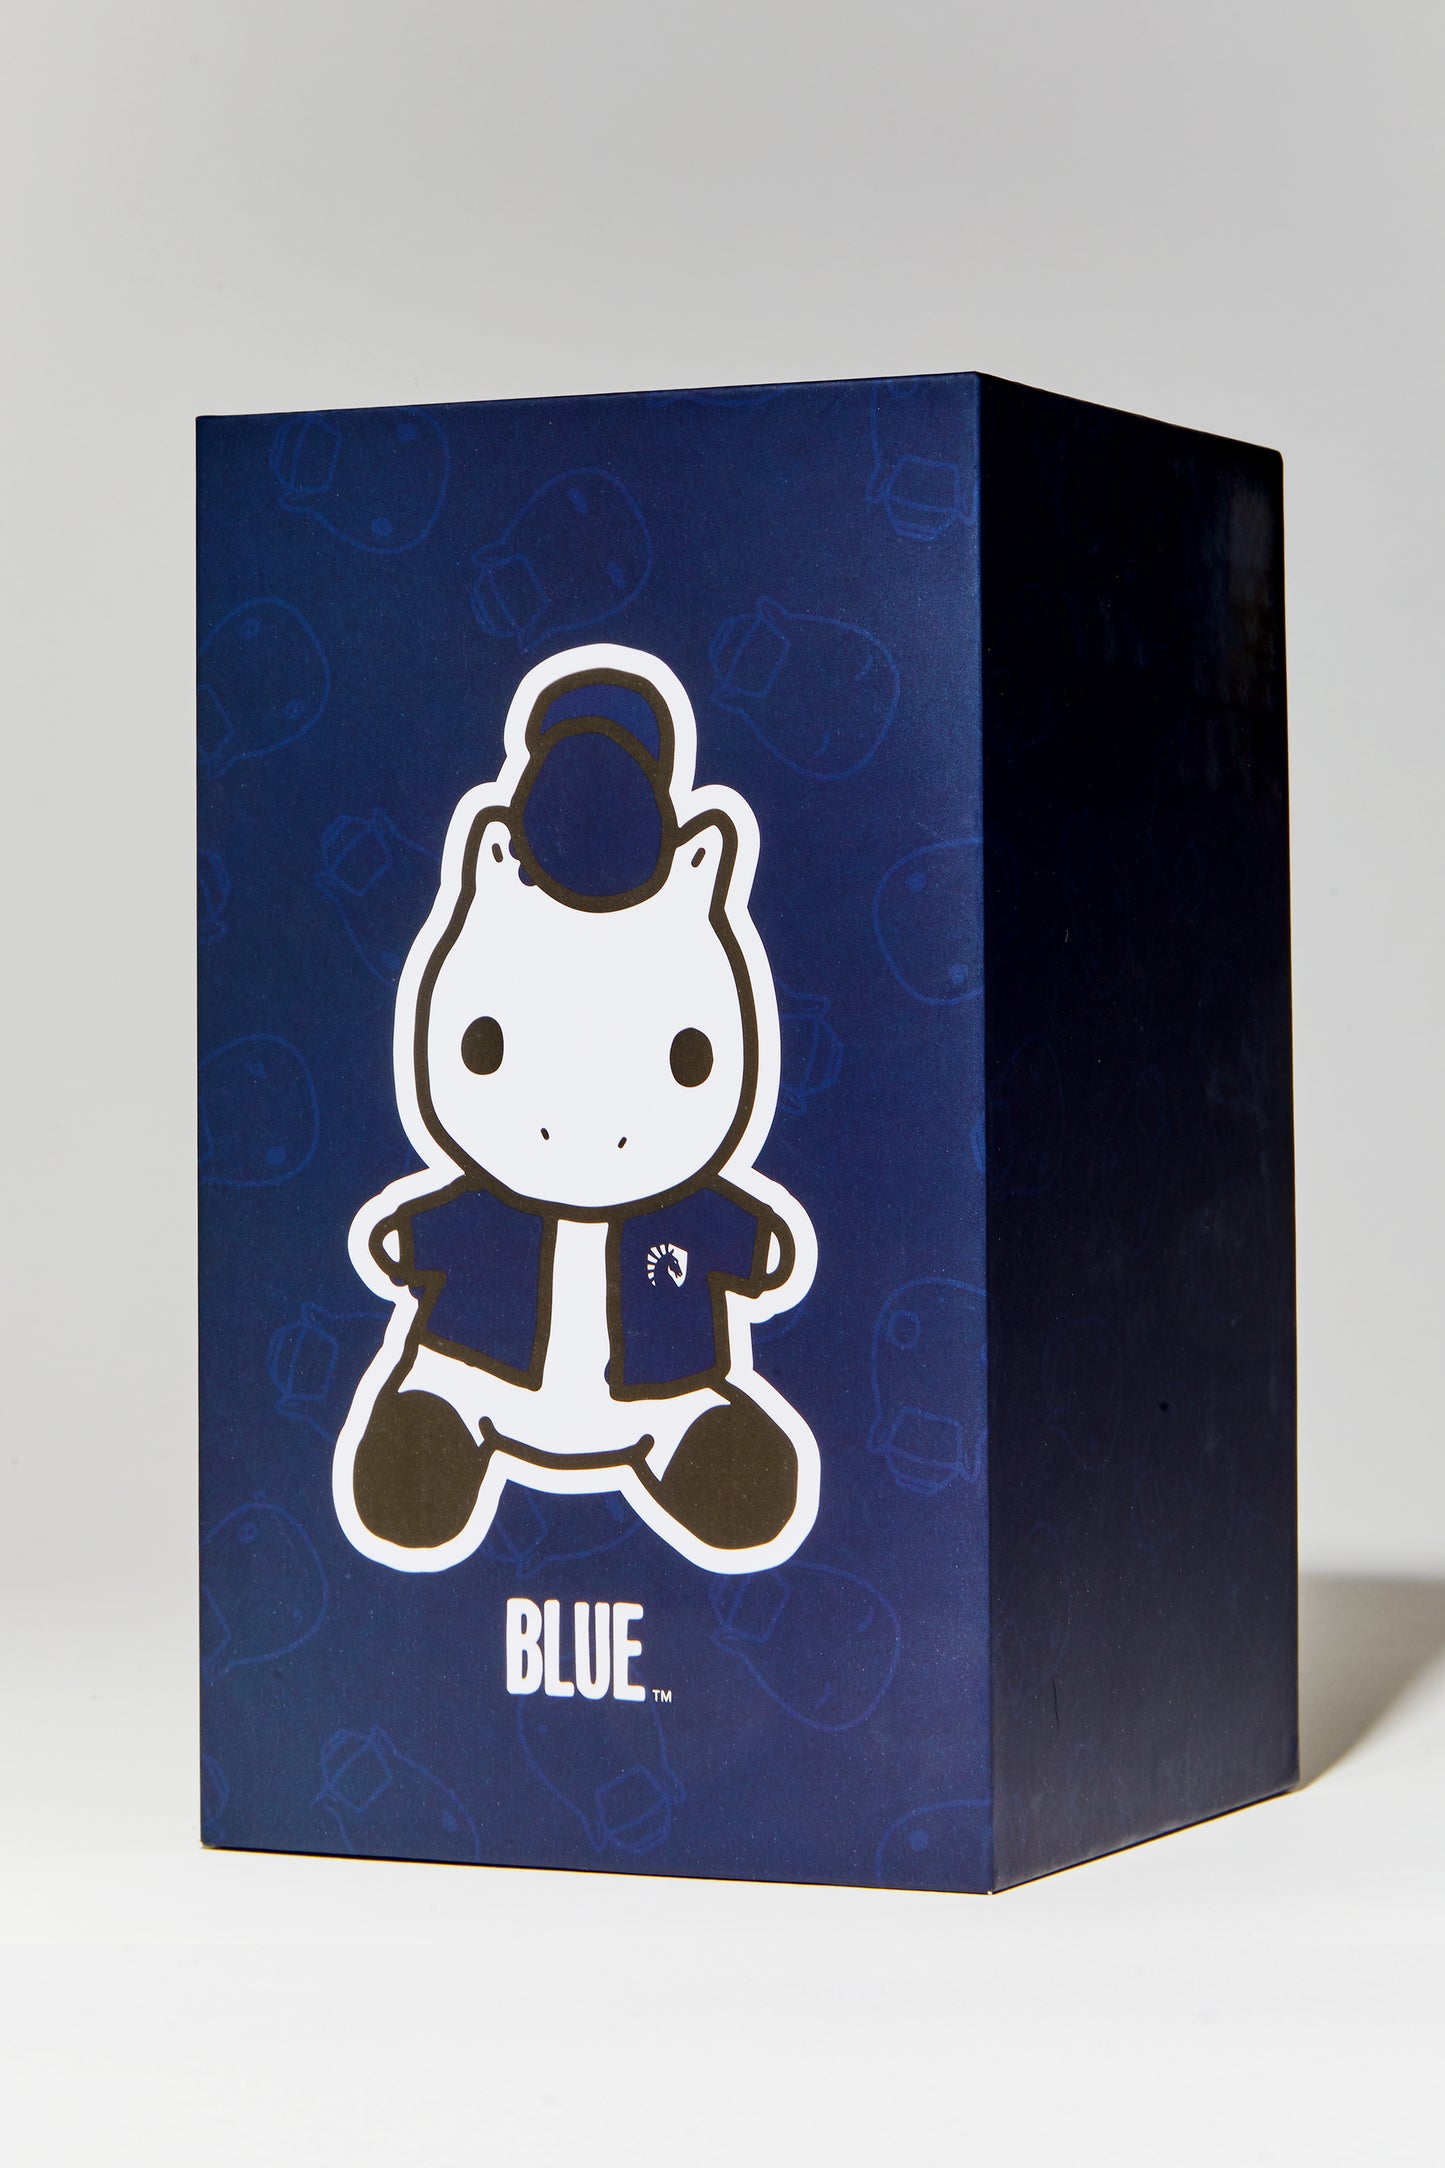 BOXED BLUE PLUSH 2.0 - Team Liquid